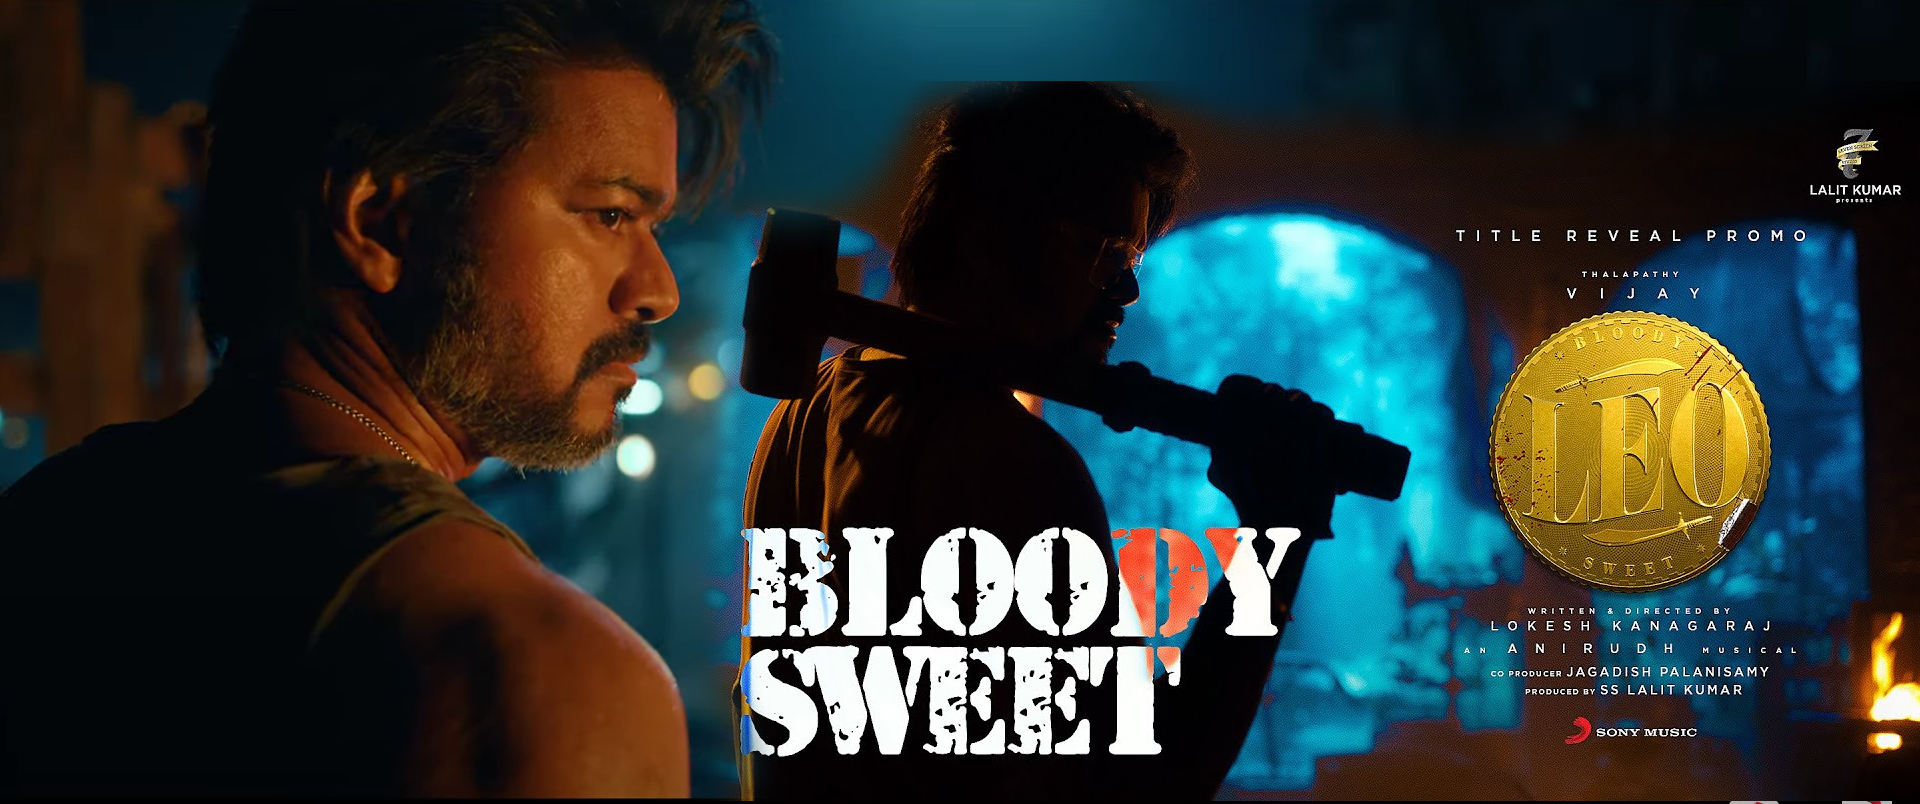 LEO Bloody Sweet Promo | Thalapathy Vijay | Lokesh Kanagaraj | Anirudh